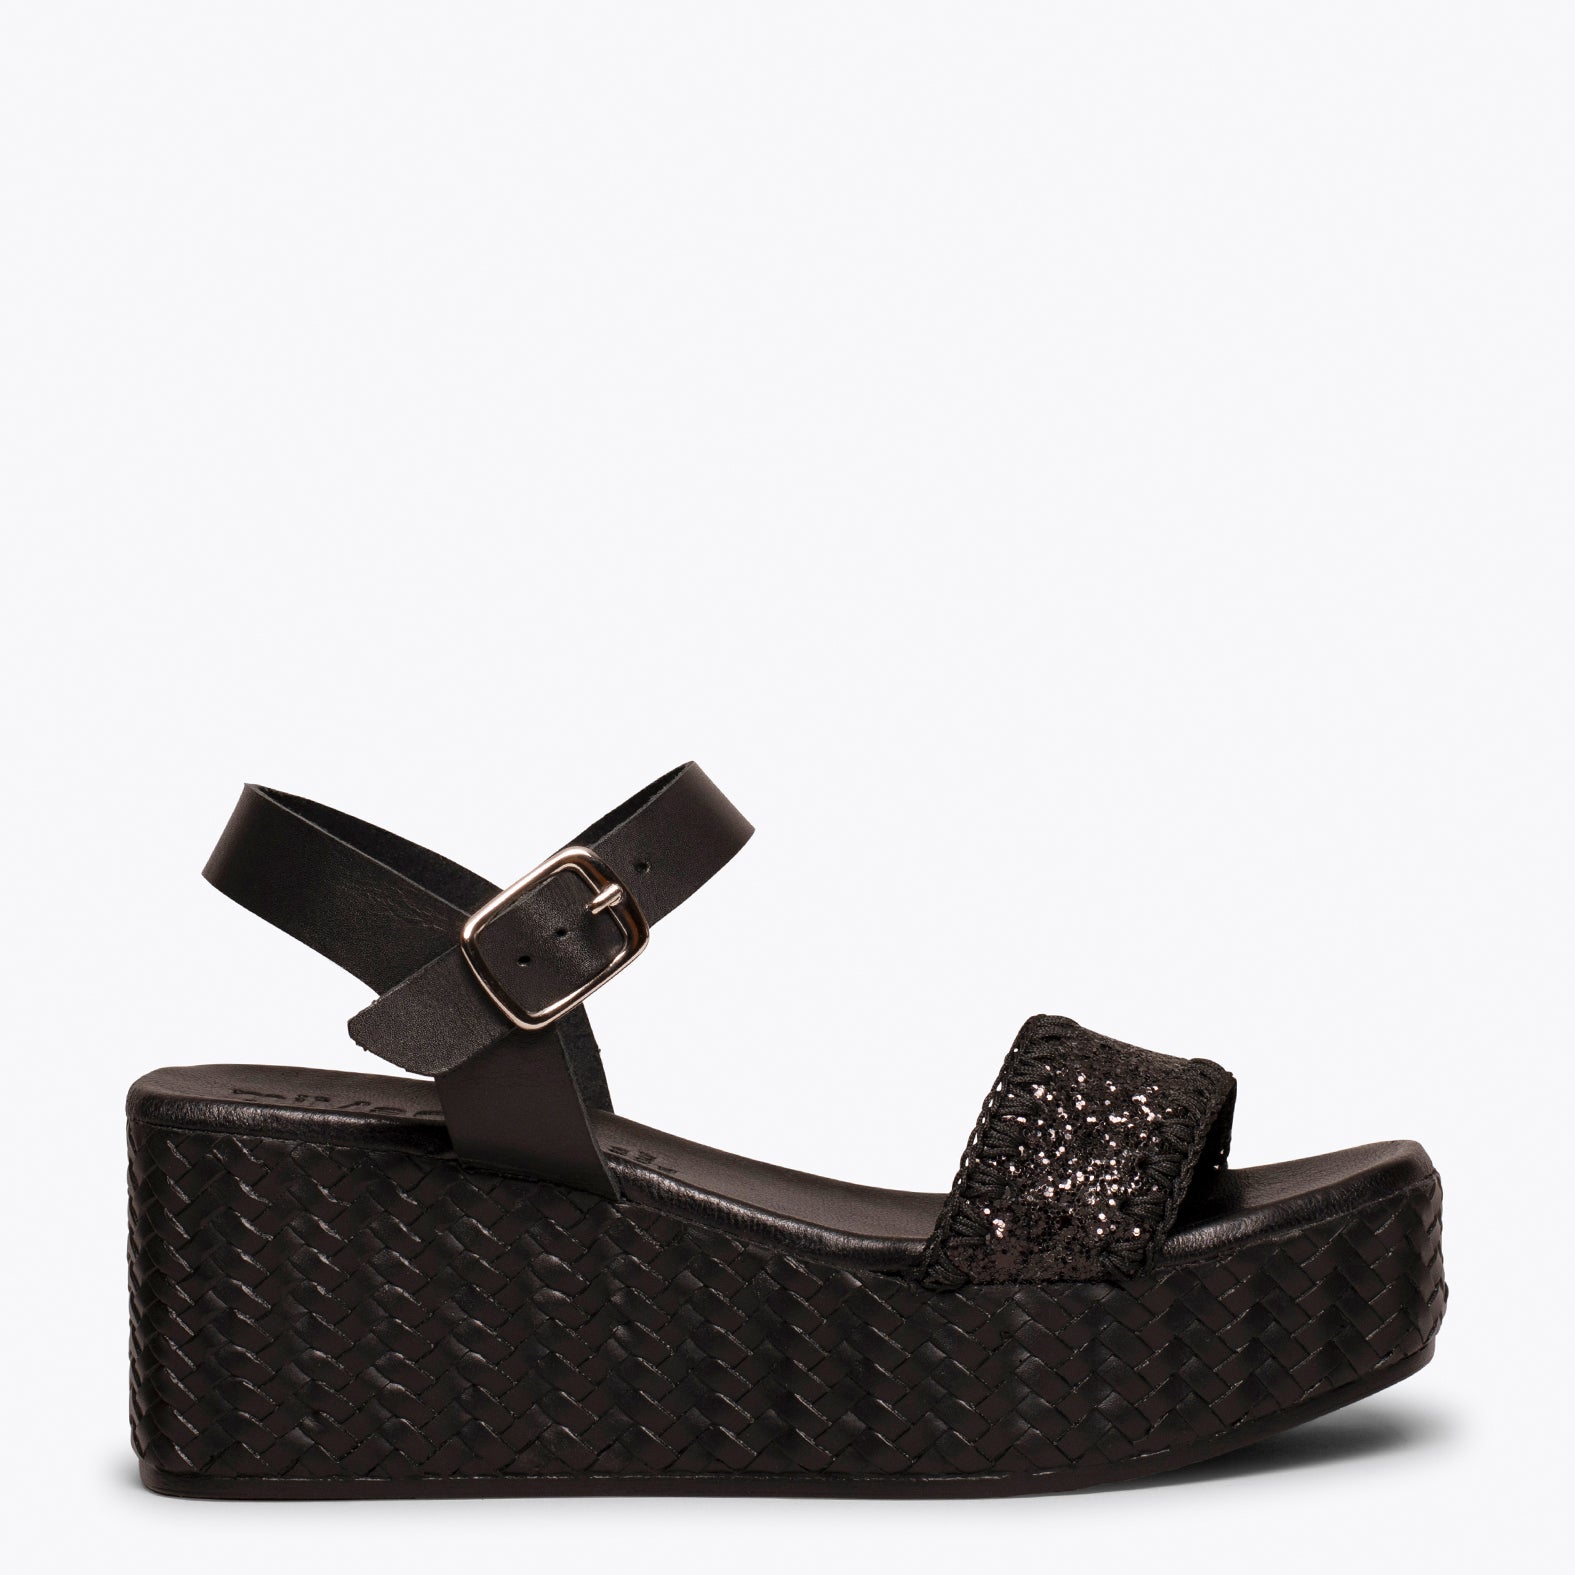 SHINE – BLACK platform sandal with glitter strap